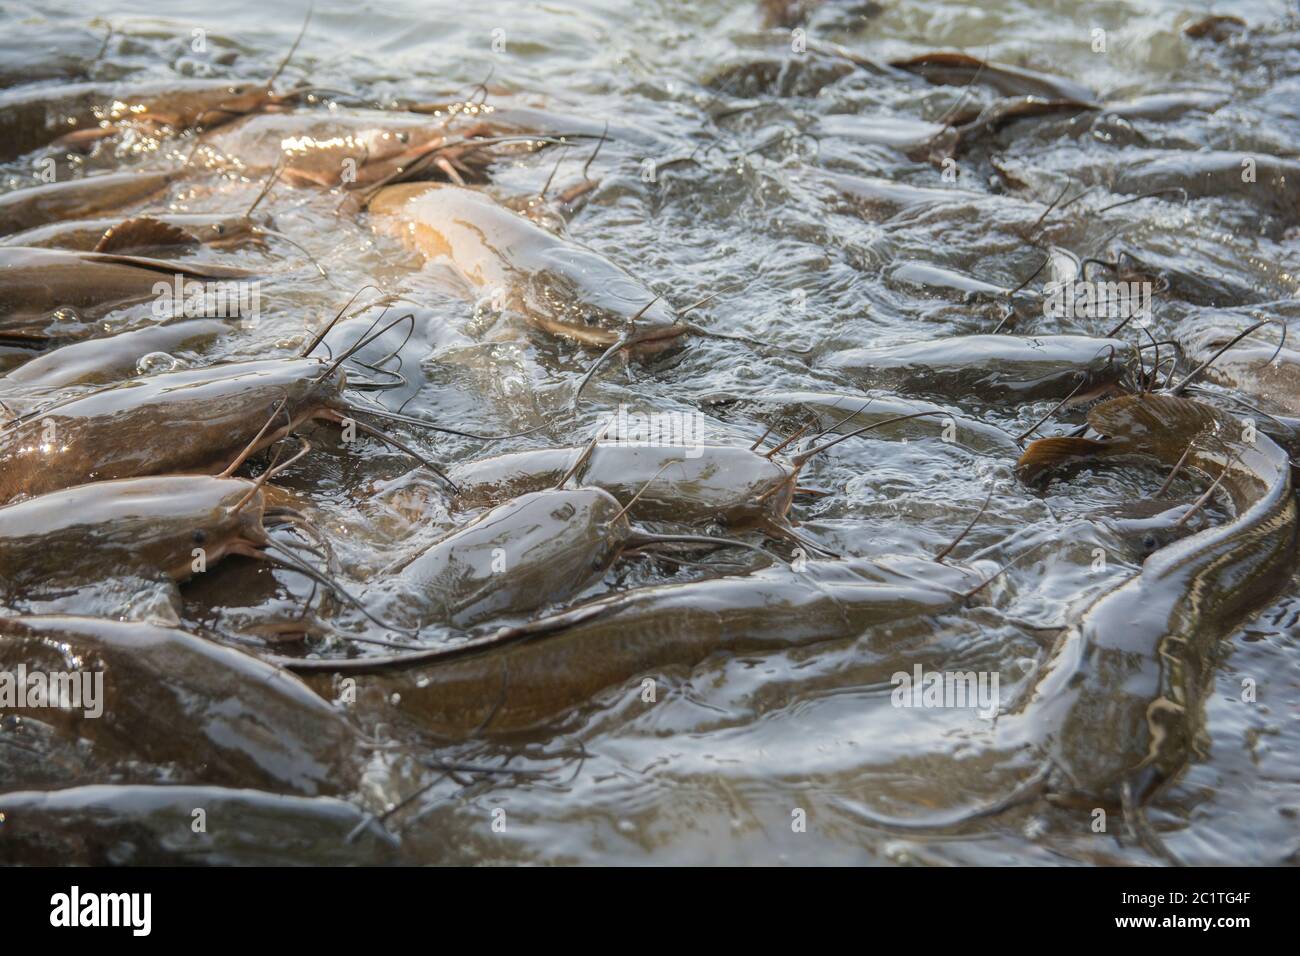 Group of African Sharptooth Catfish (Clarias gariepinus) Stock Photo